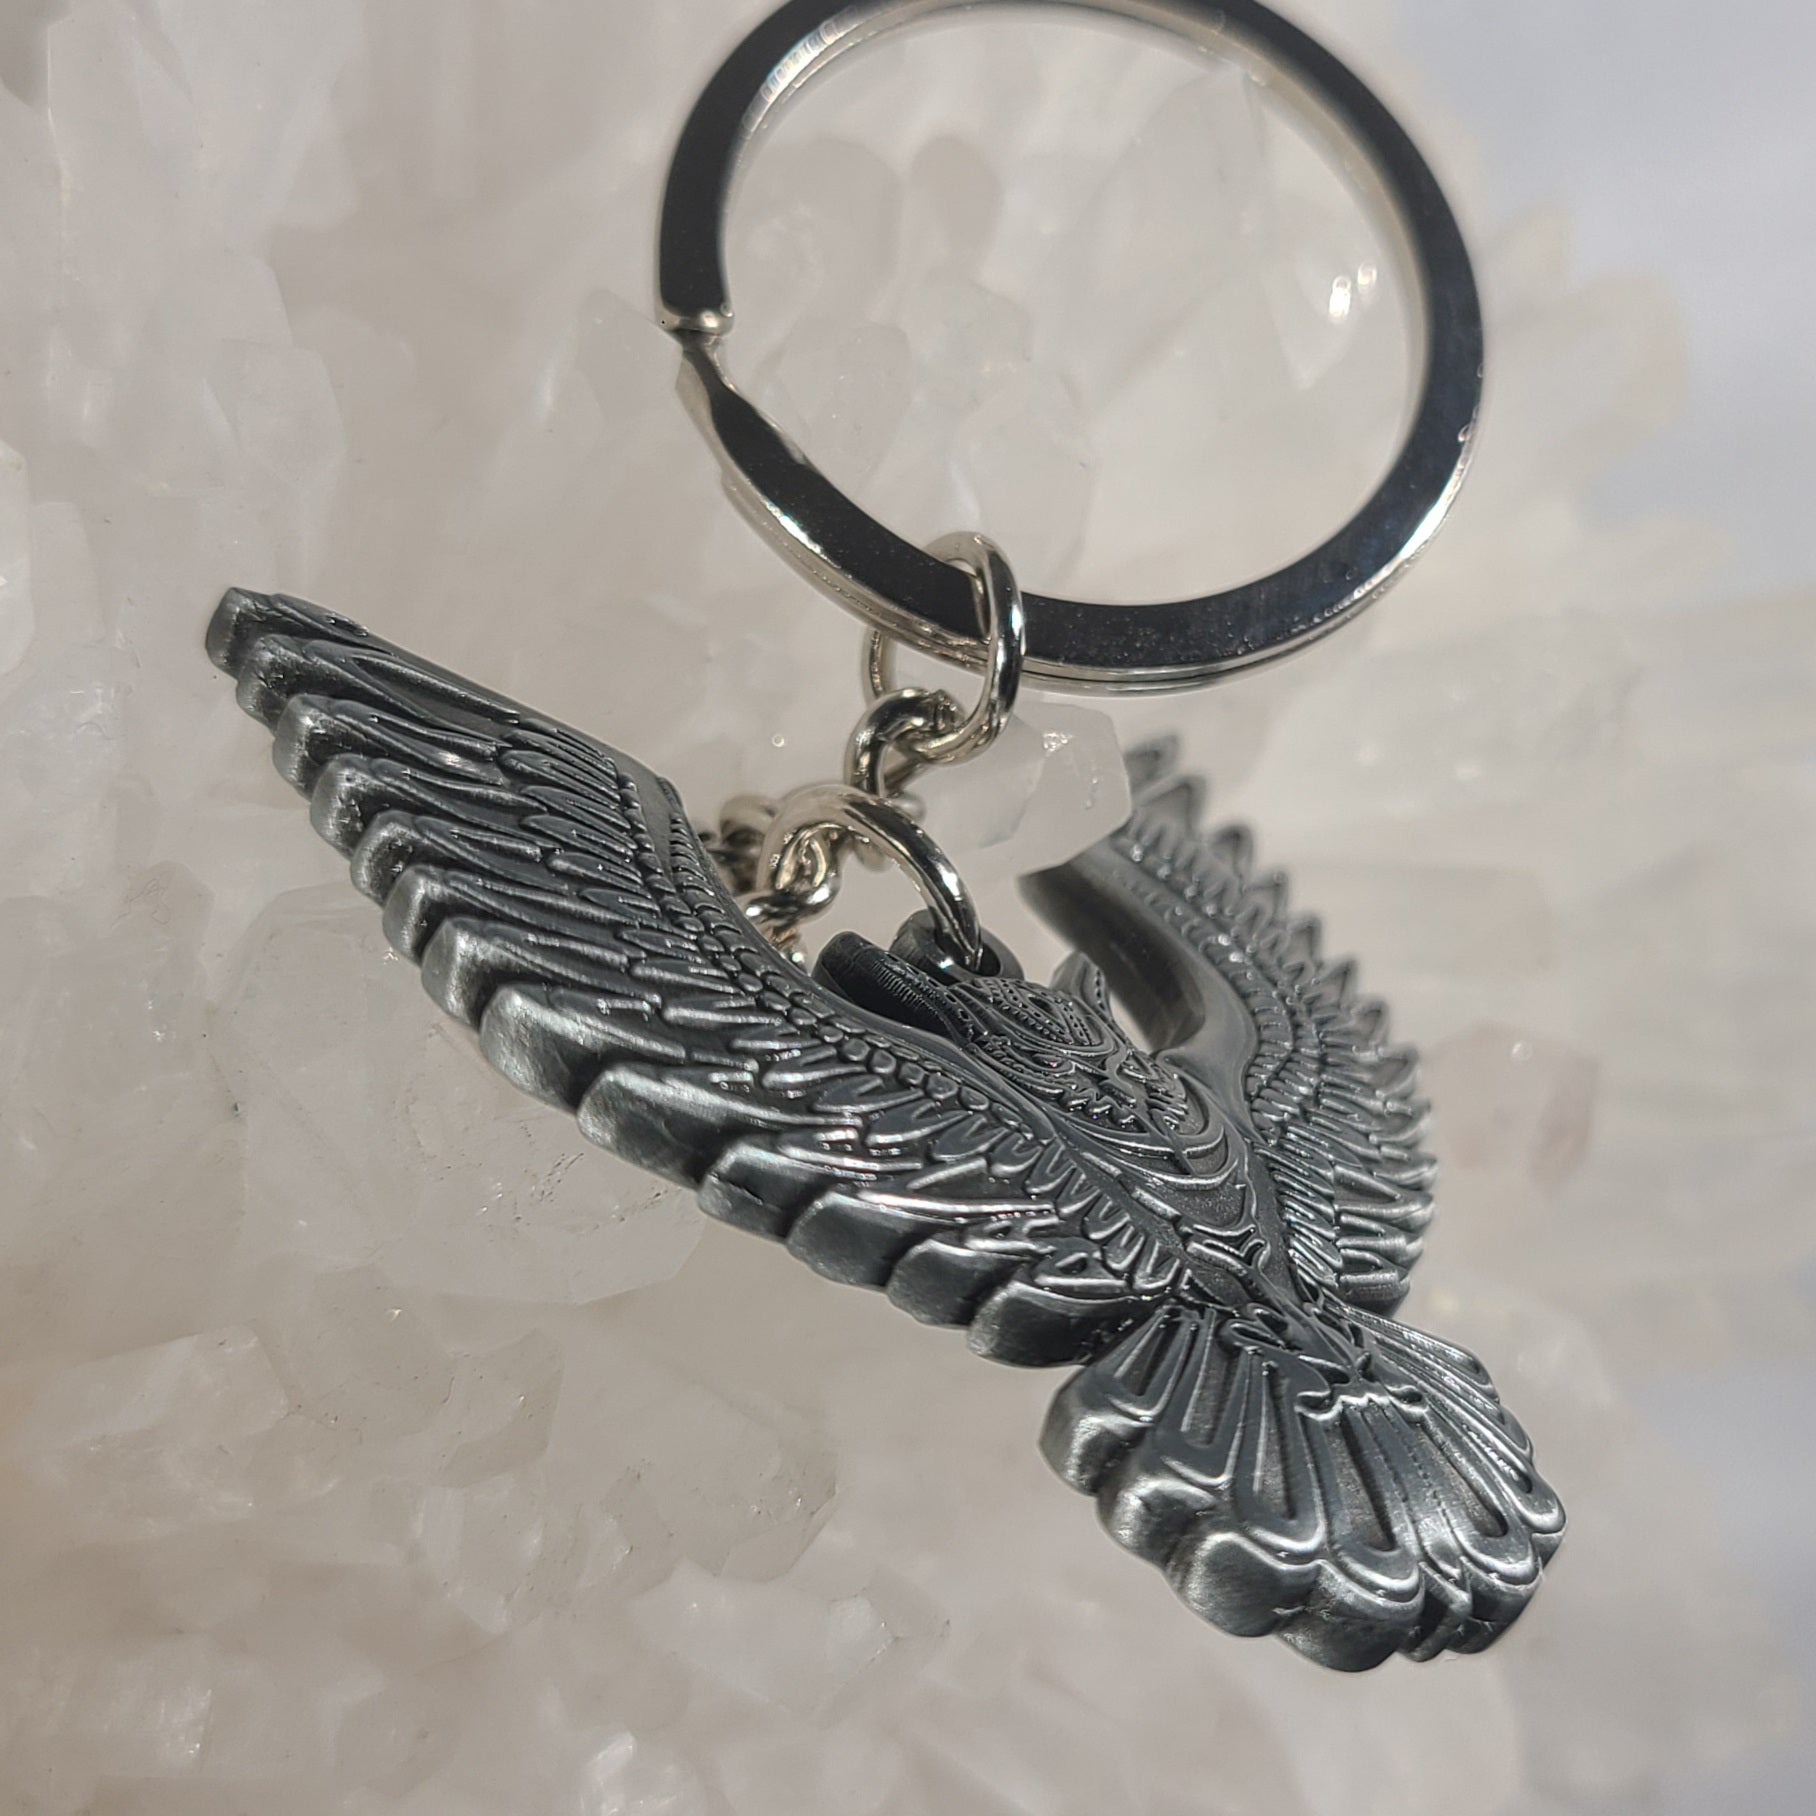 10 Pack - Night Owl Flight Tribal Wings Bat Bird Animal Silver 3D Metal Keychains Wholesale Key-Chain Key Chains